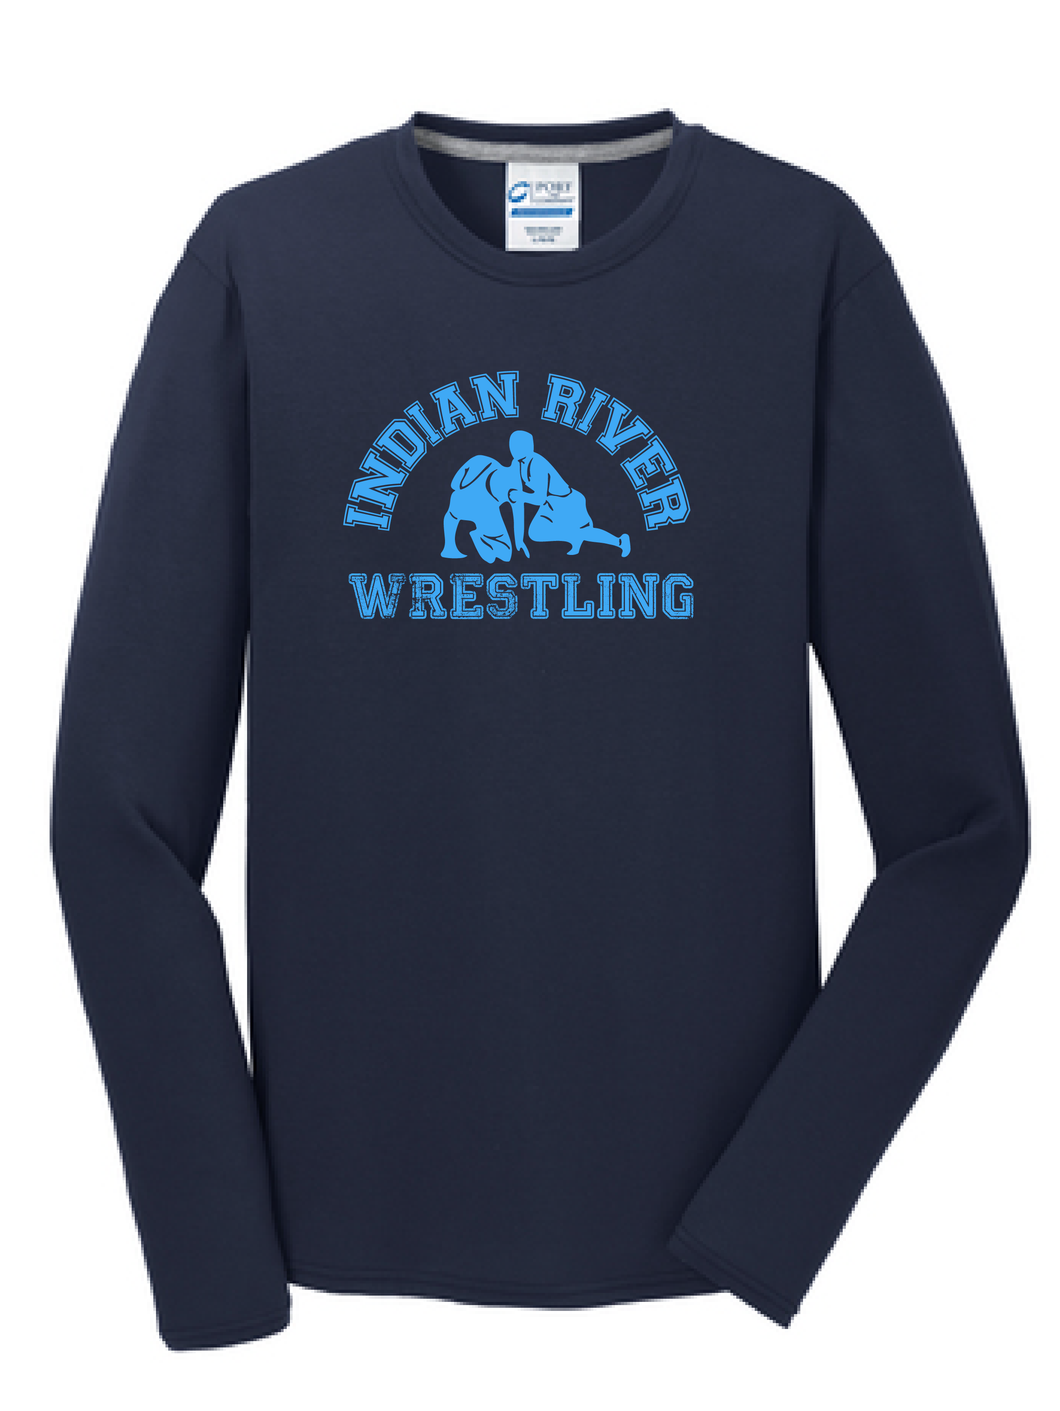 Cotton Long Sleeve Shirt / Navy / Indian River Wrestling - Fidgety